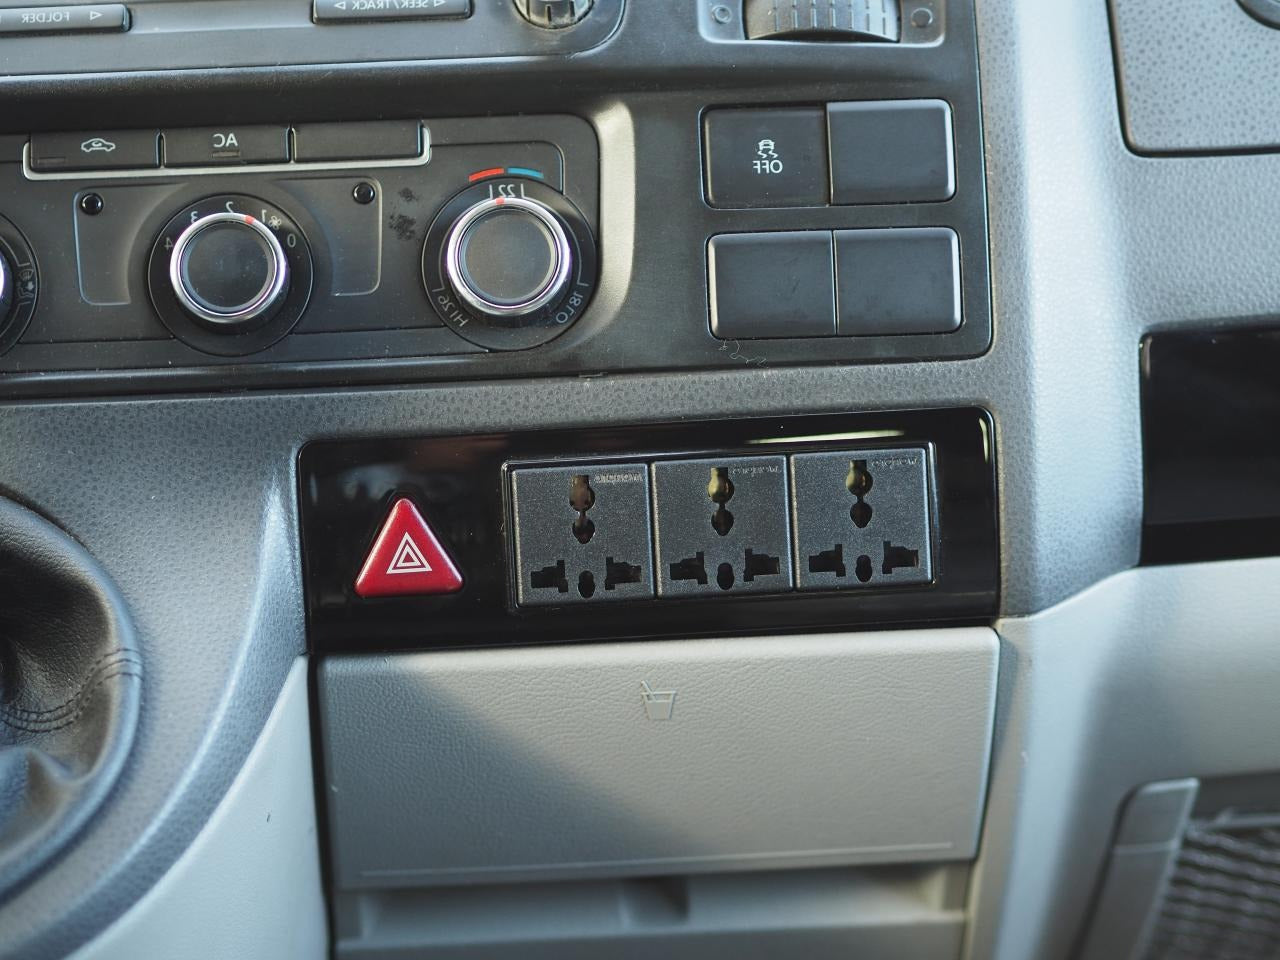 VW T5.1 Comfort Dash Interior Full Styling Kit